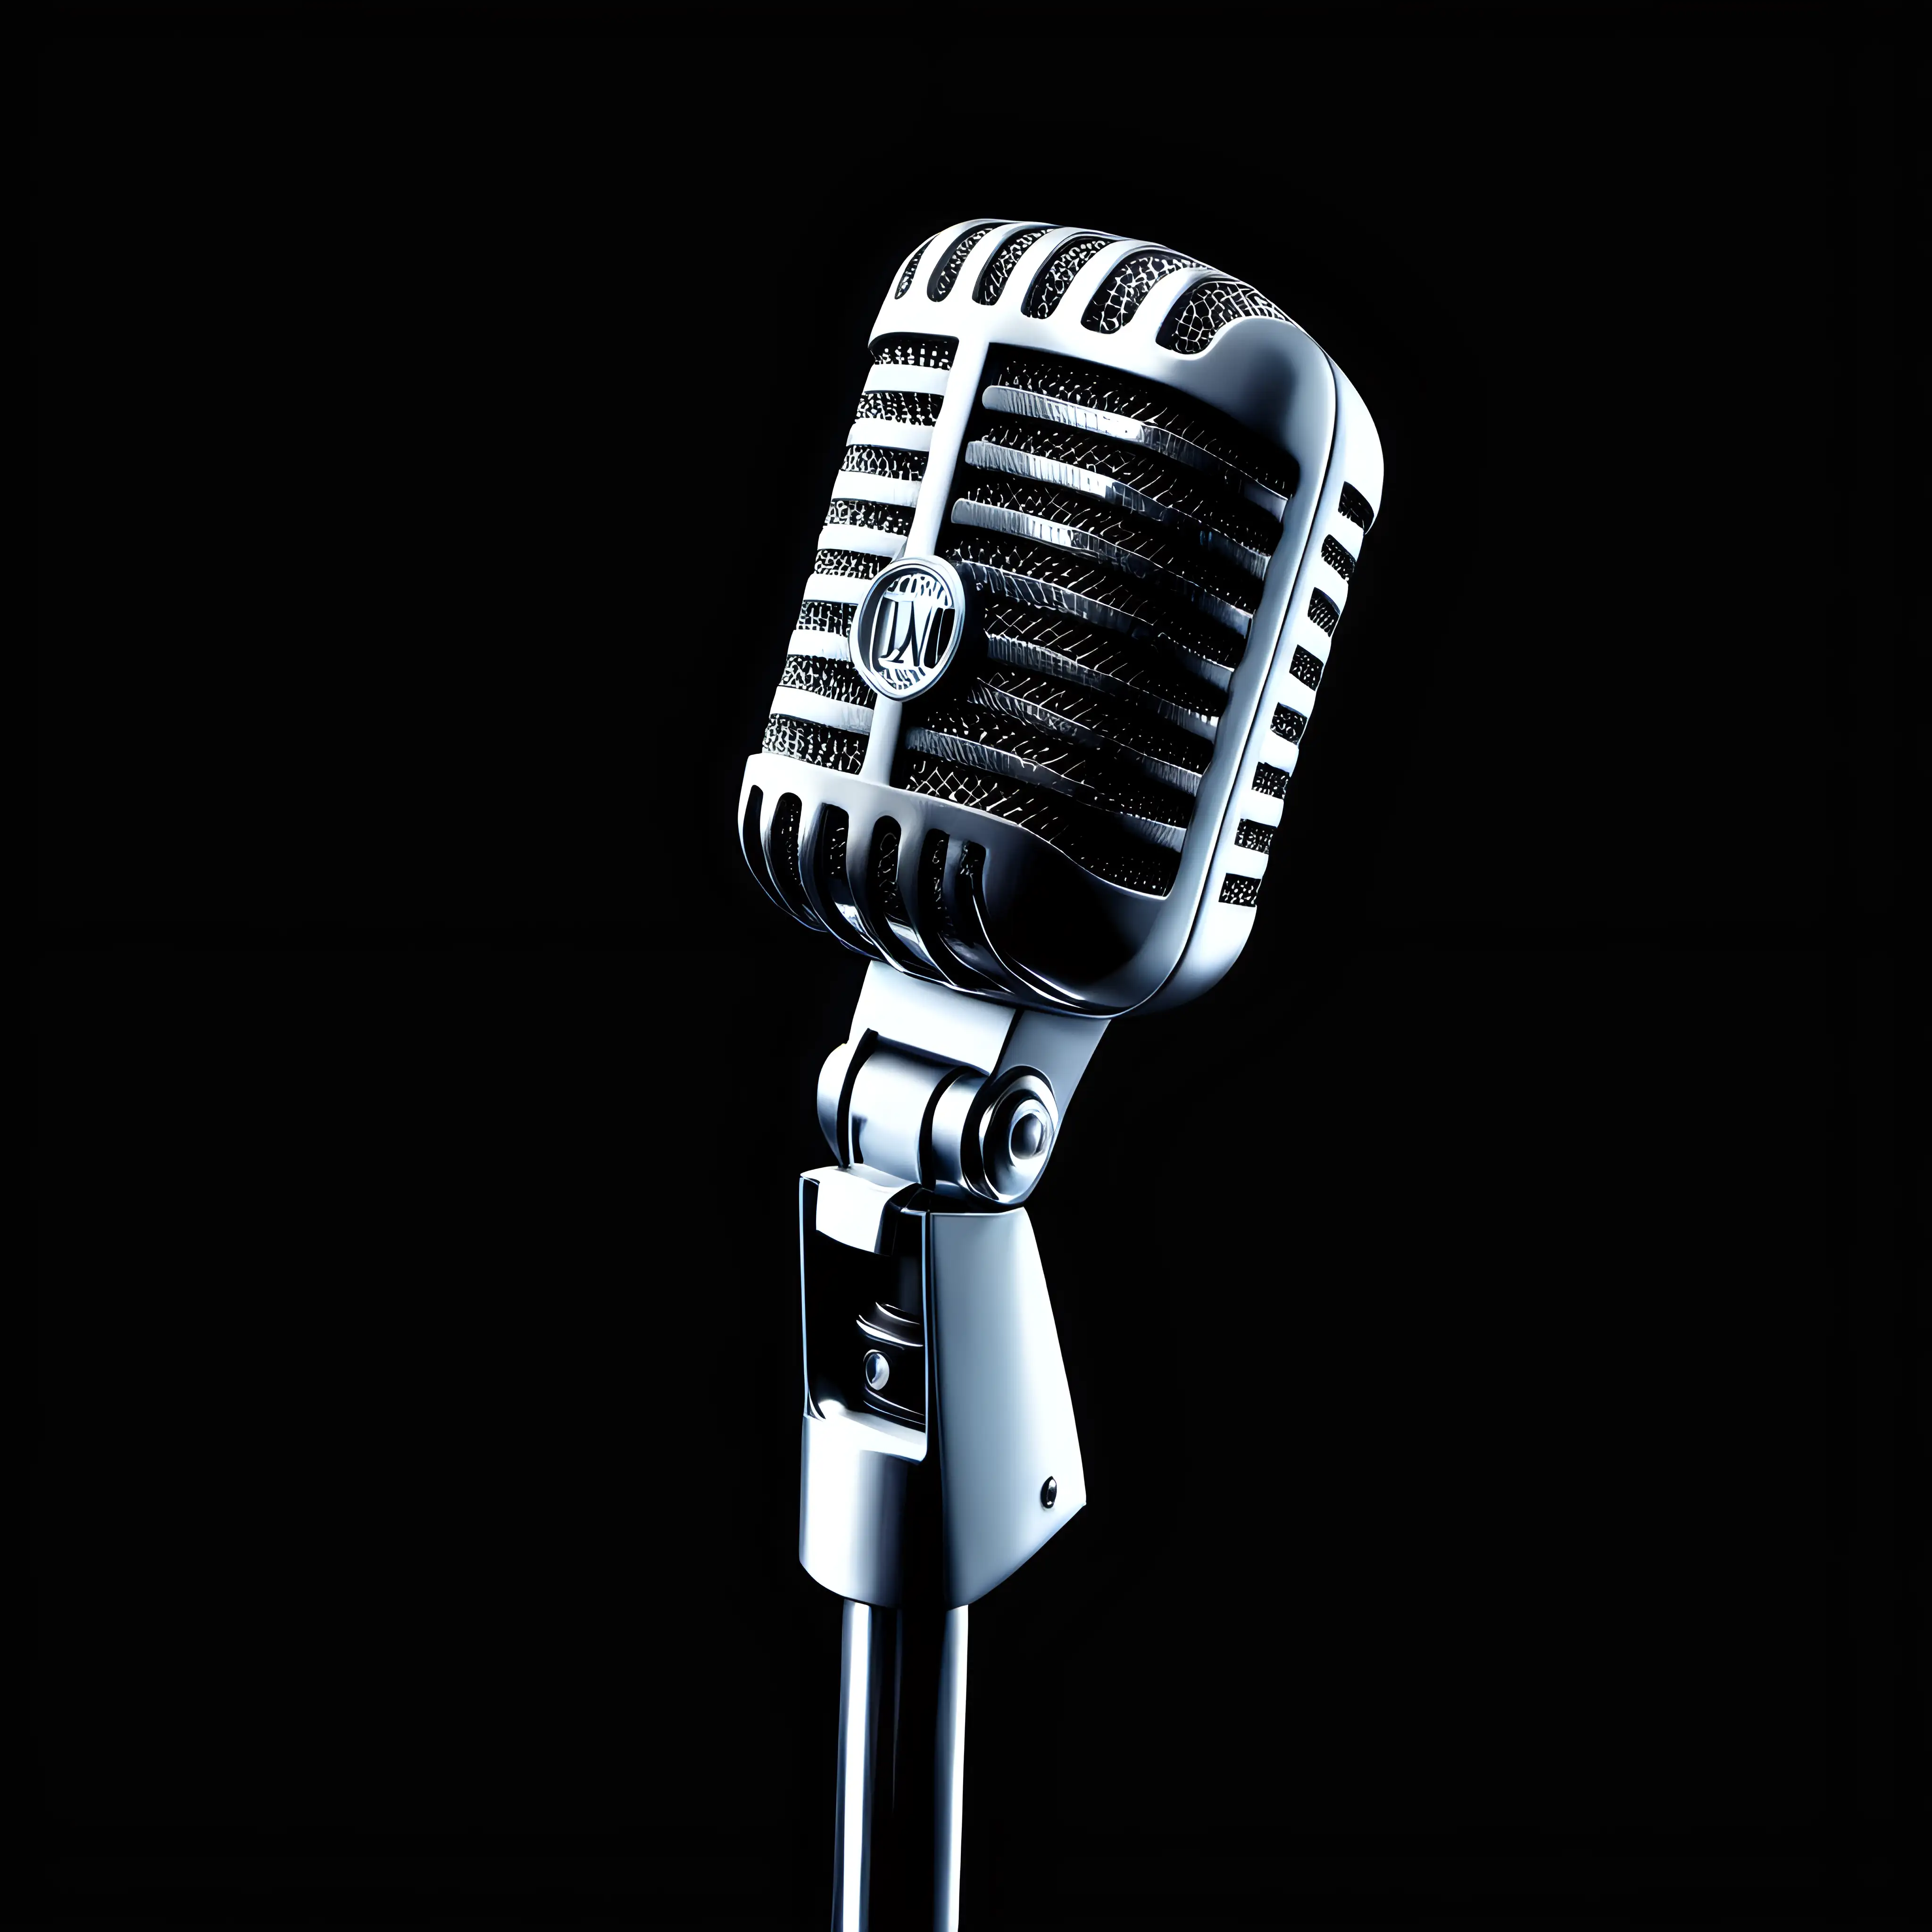 Black Background Microphone on Display